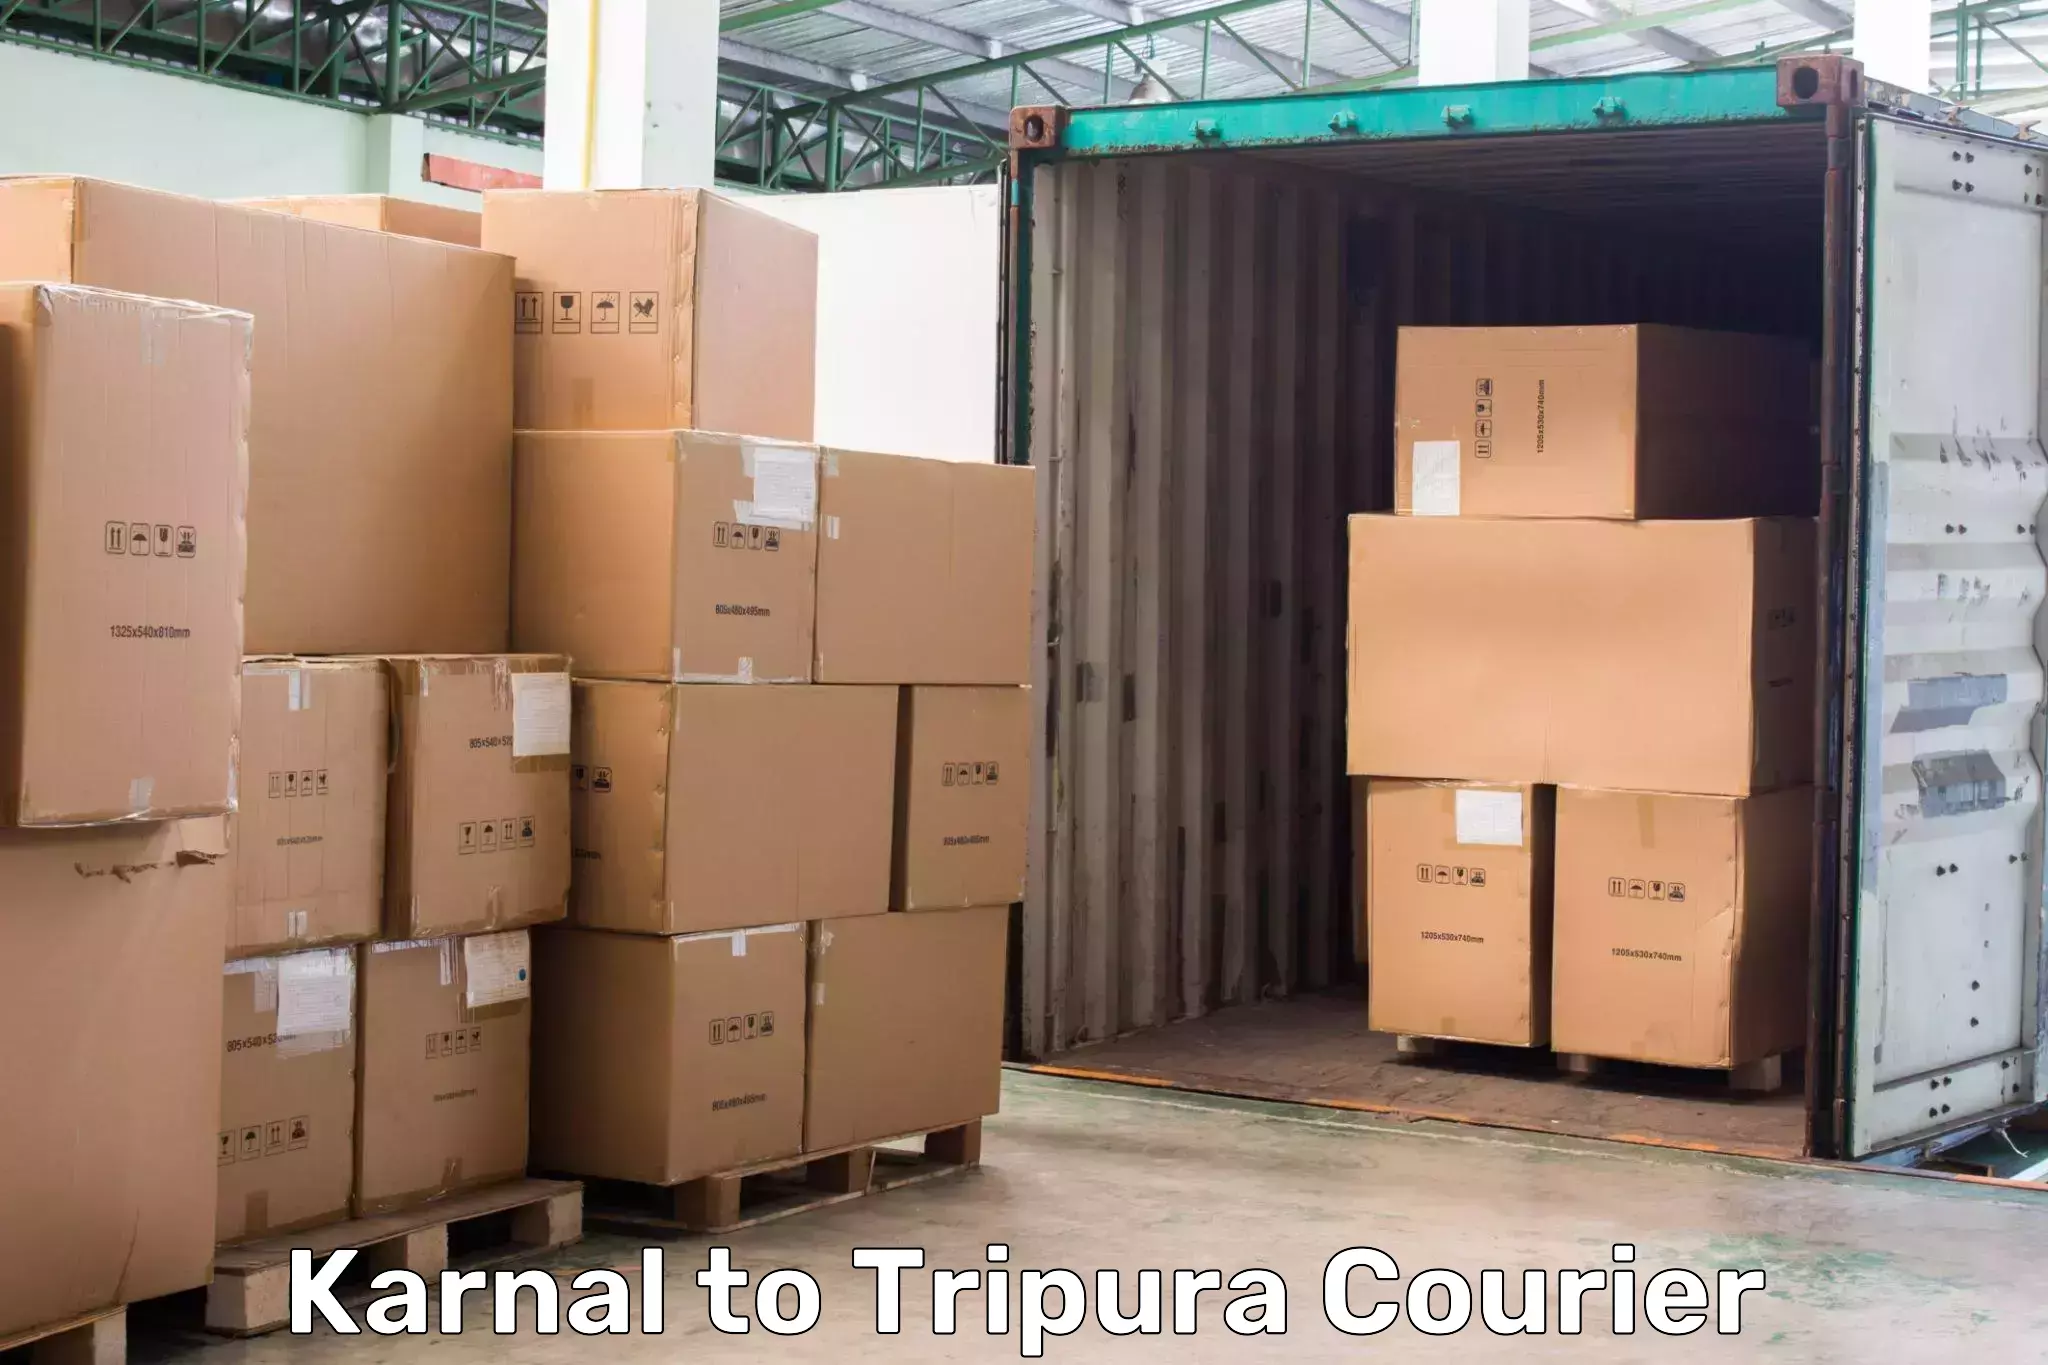 Courier service comparison Karnal to Udaipur Tripura